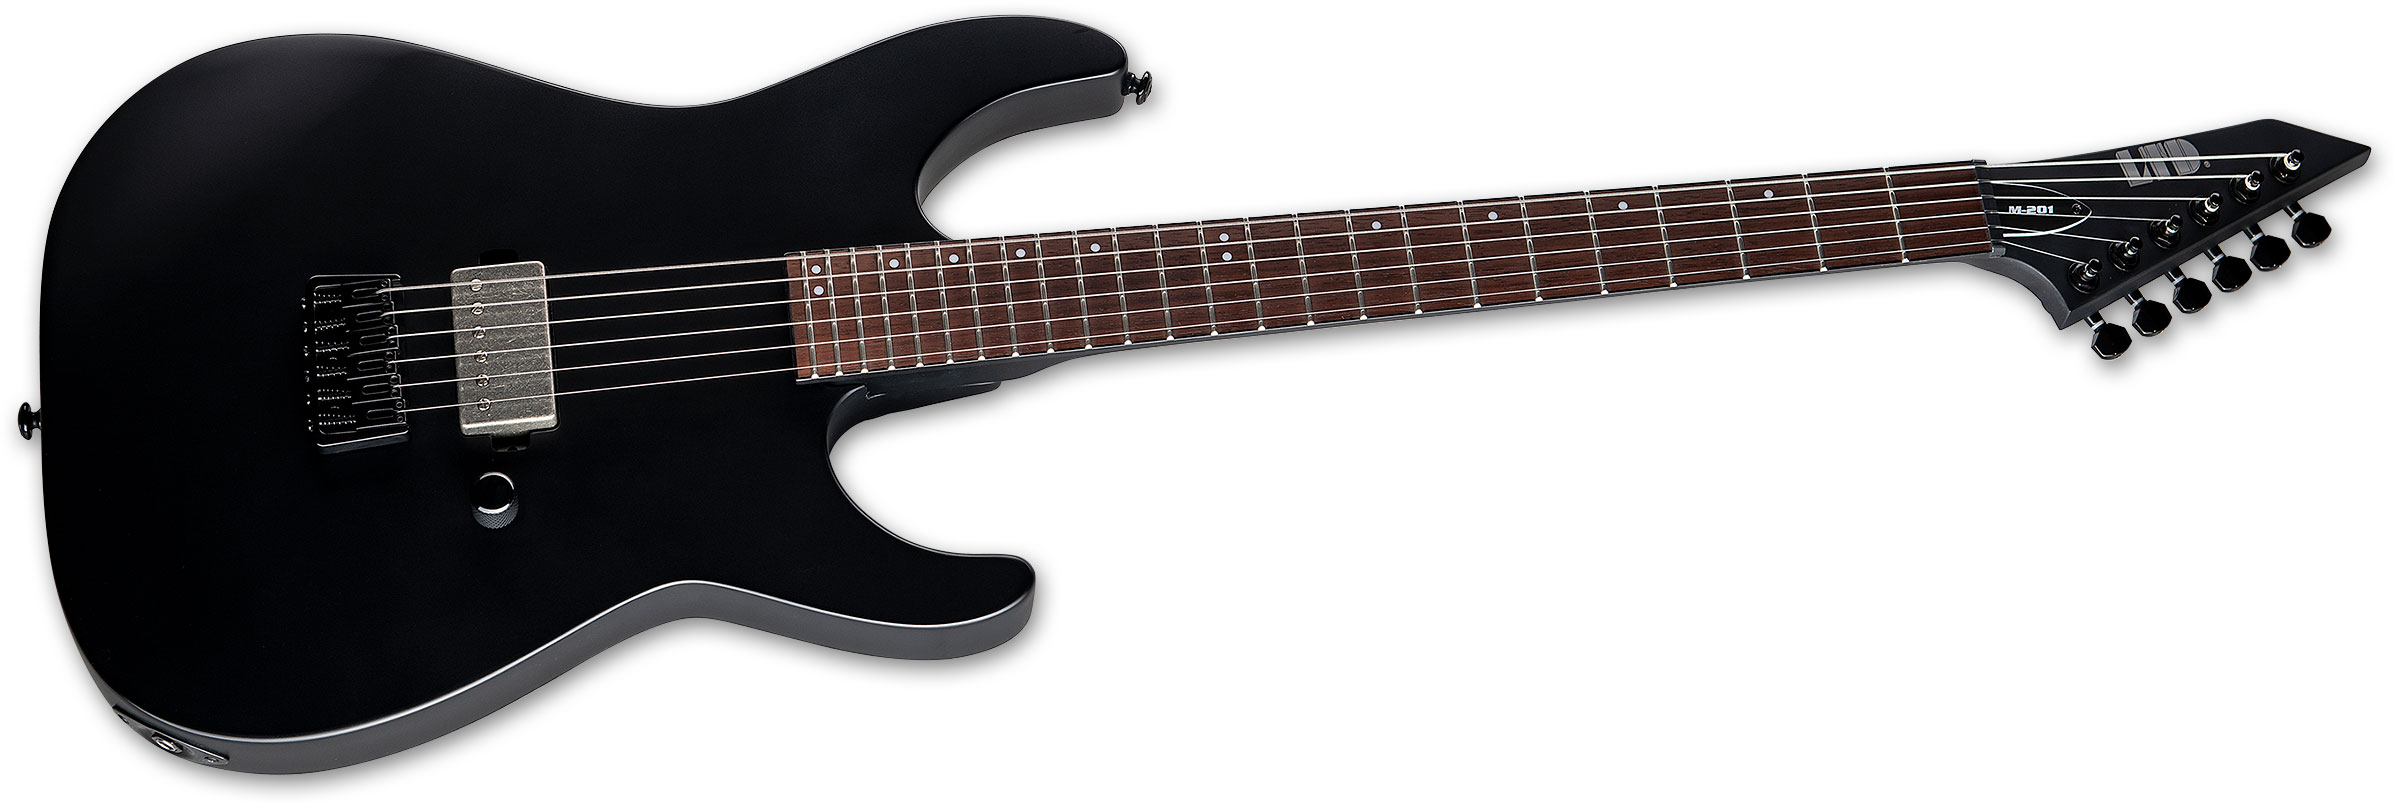 Ltd M-201ht 1h Ht Jat - Black Satin - Guitarra eléctrica con forma de str. - Variation 1